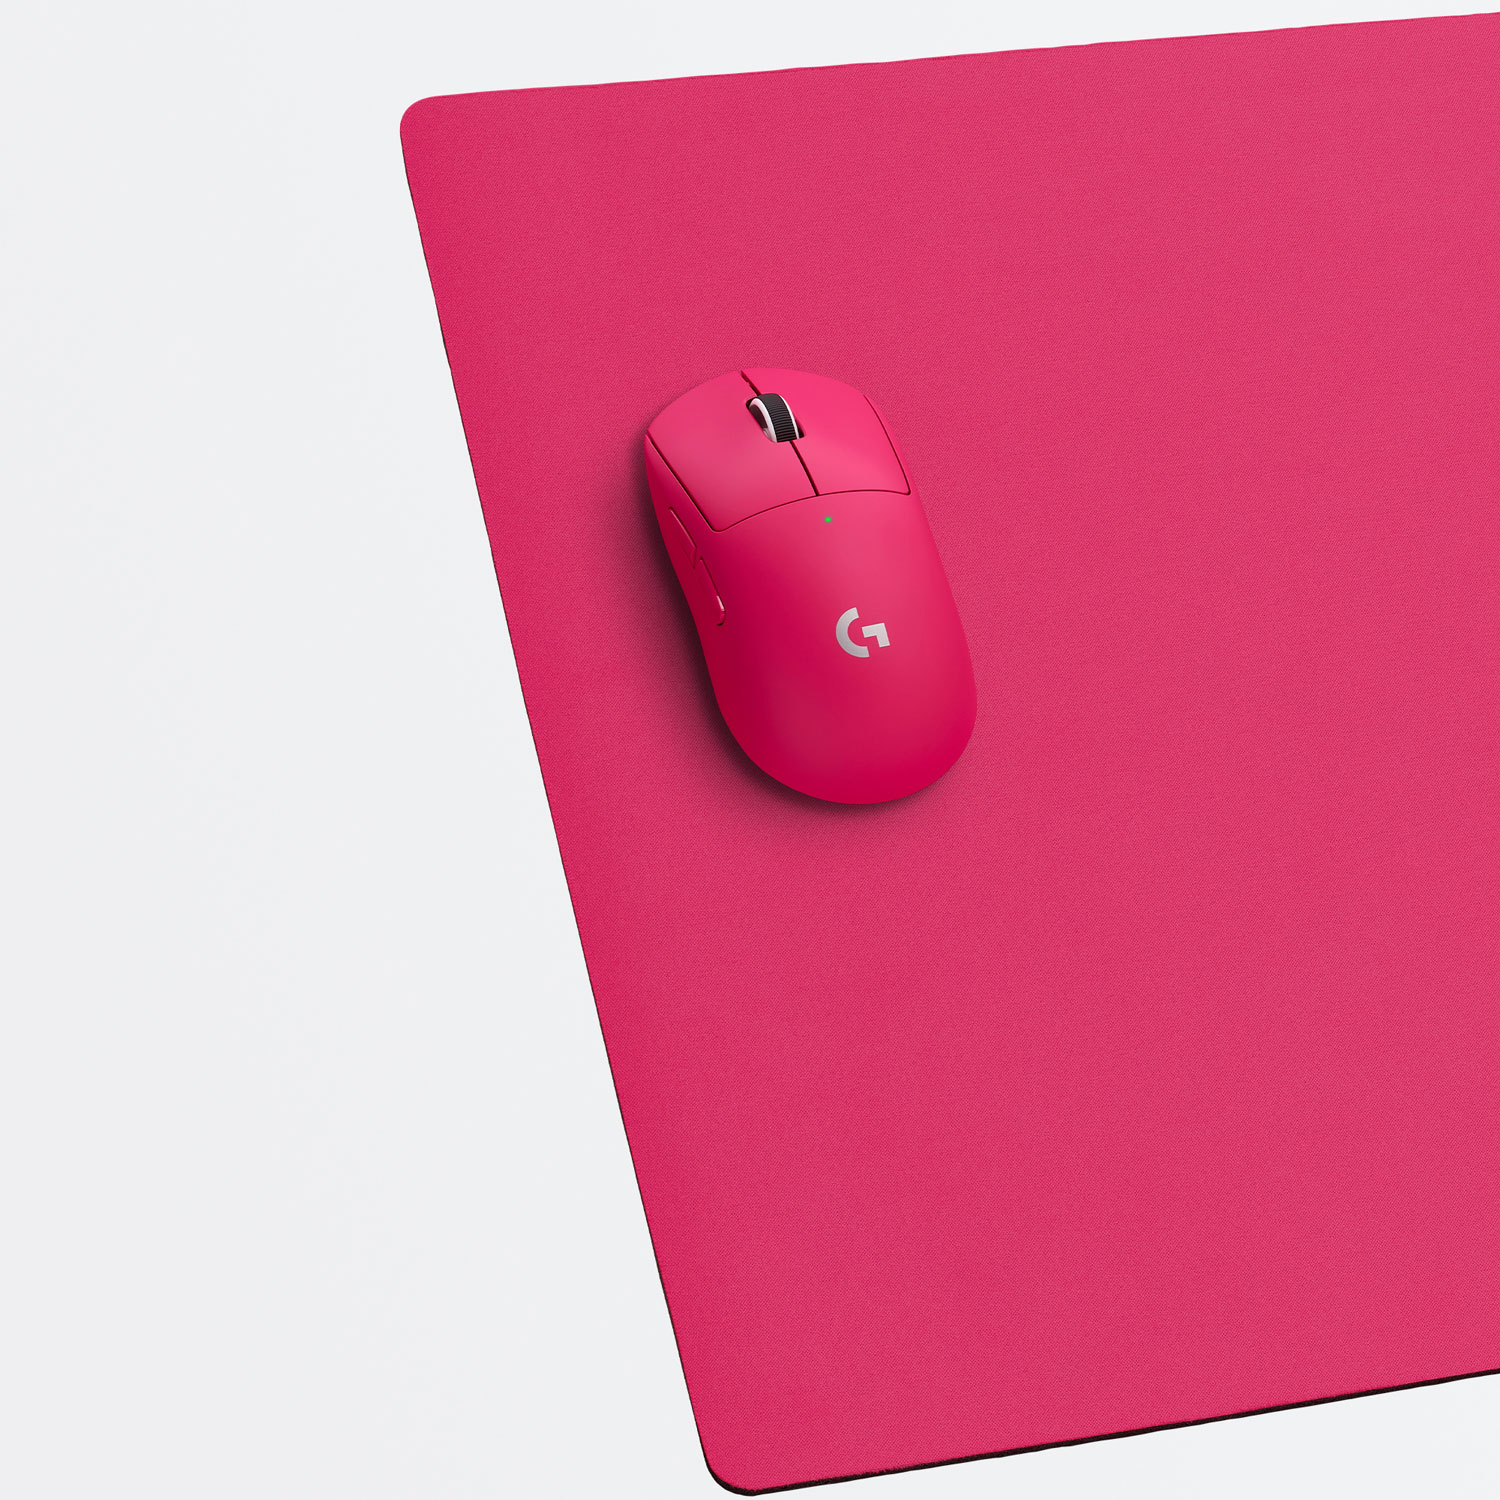 Logitech G840 XL Cloth Gaming Mouse Pad - Pink